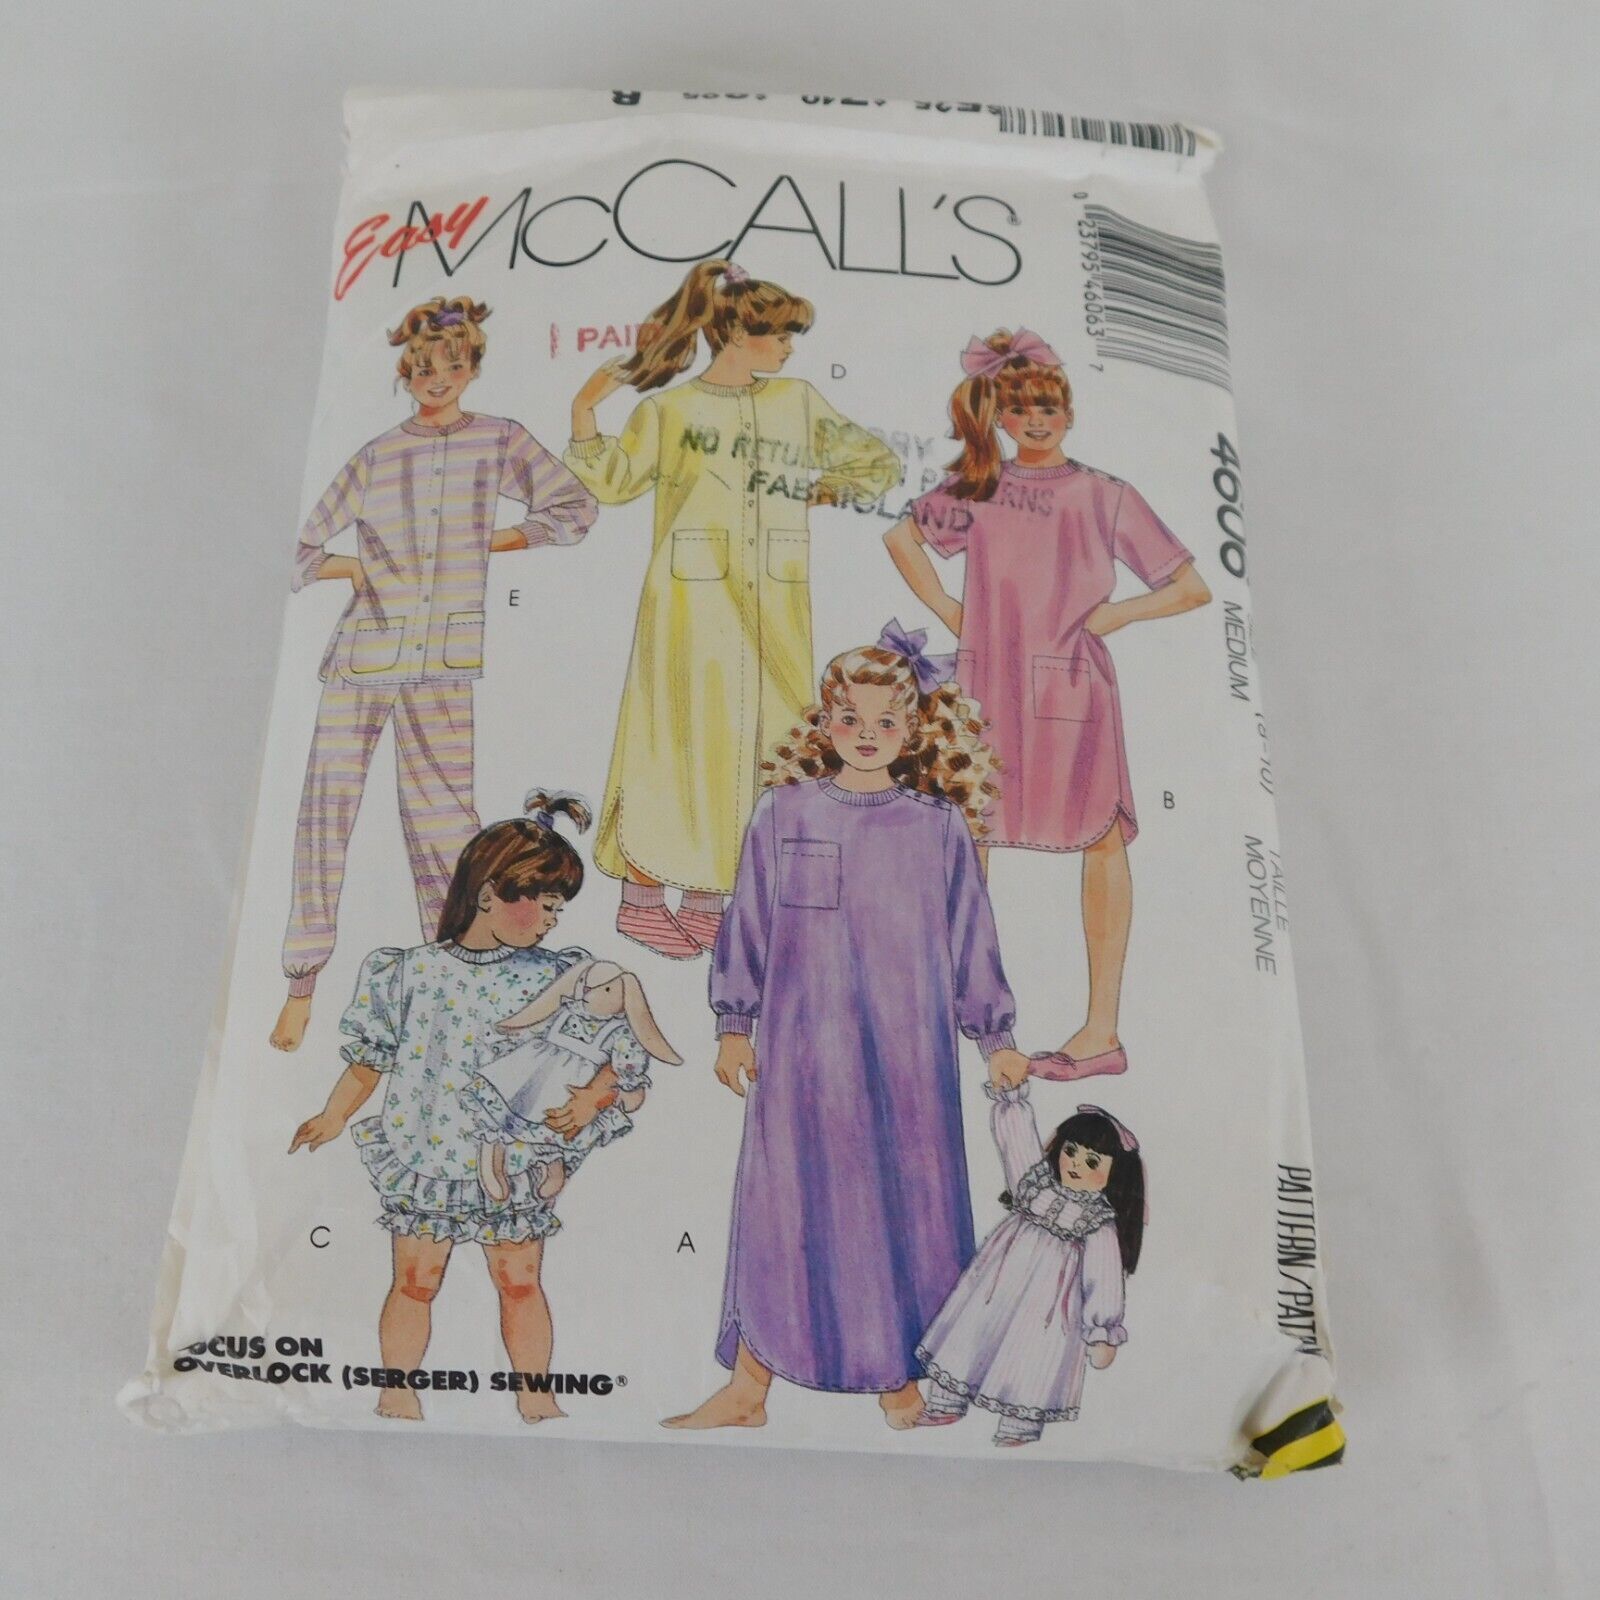 McCalls 4606 Sewing Pattern Girls Sleepwear Size M 8-10 Pajamas Nightgown CUT - $5.95